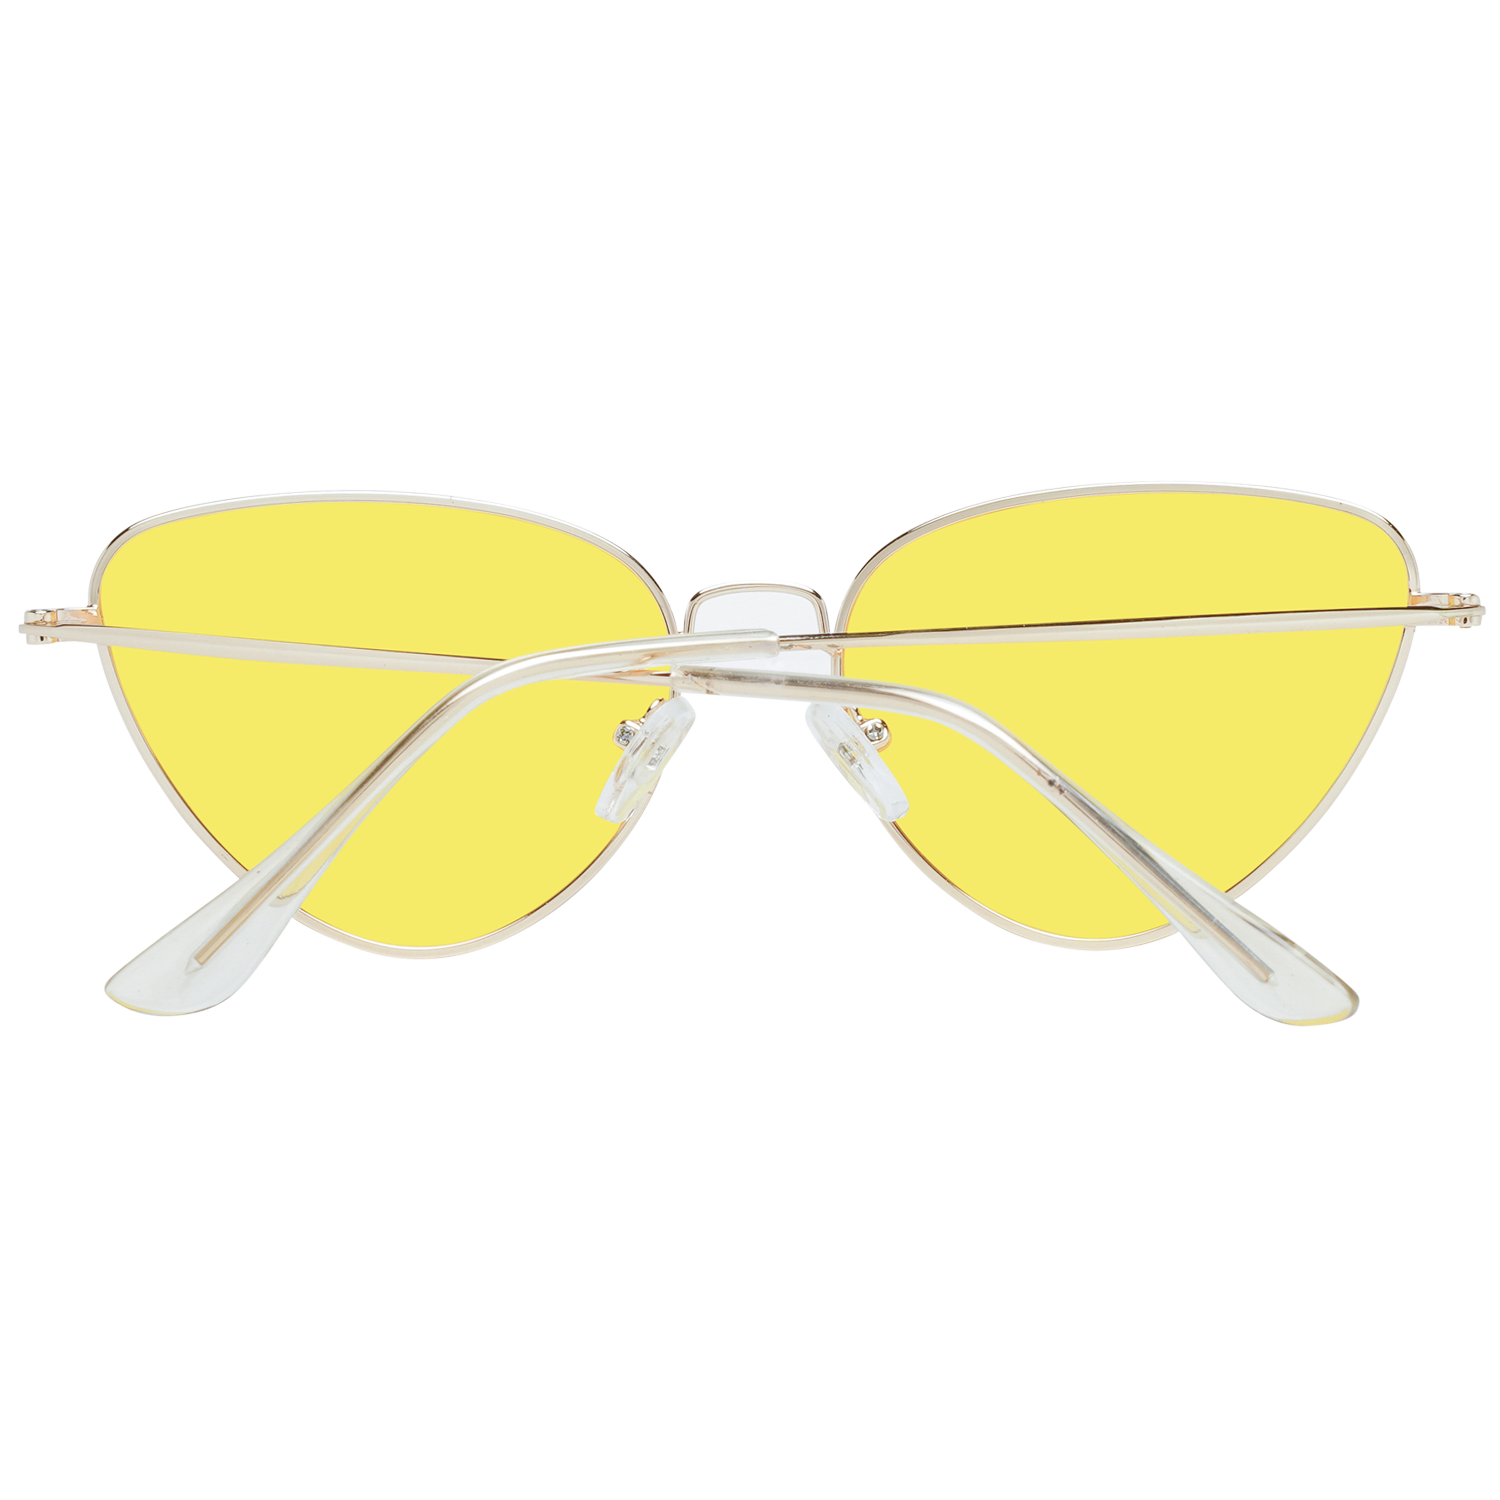 Millner Sunglasses Millner Sunglasses 0020604 Picadilly Eyeglasses Eyewear UK USA Australia 